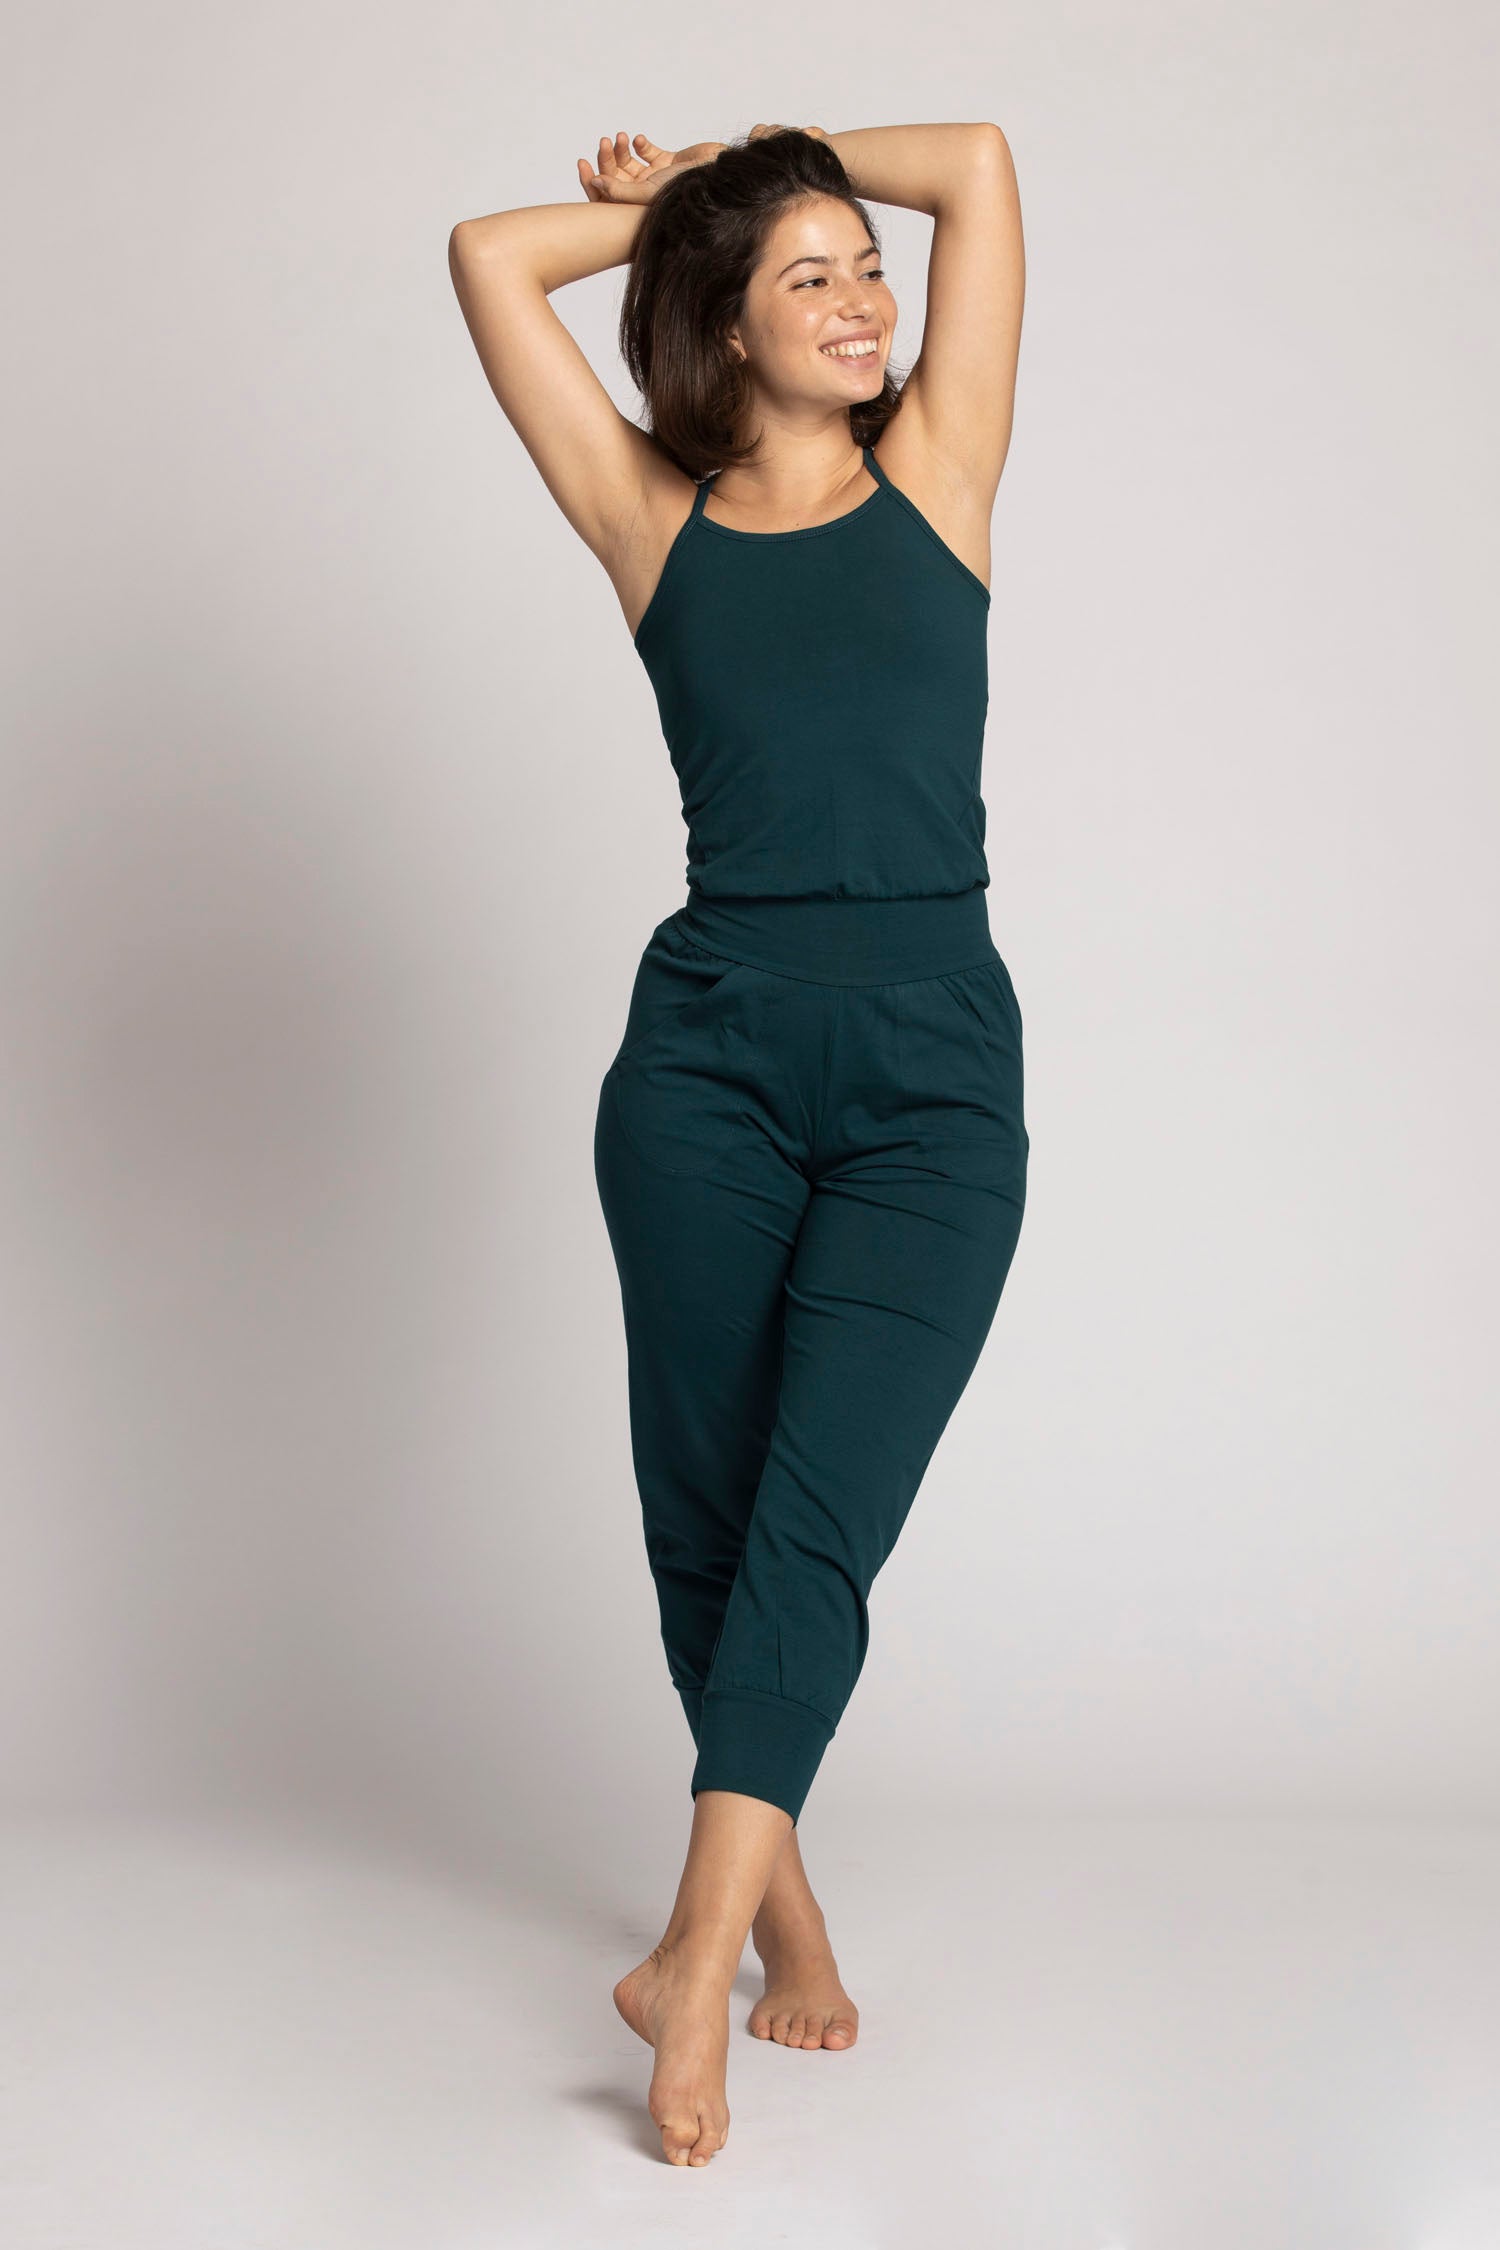 Organic Cotton Yoga Jumpsuit womens clothing Ripple Yoga Wear organic cobalt green S 